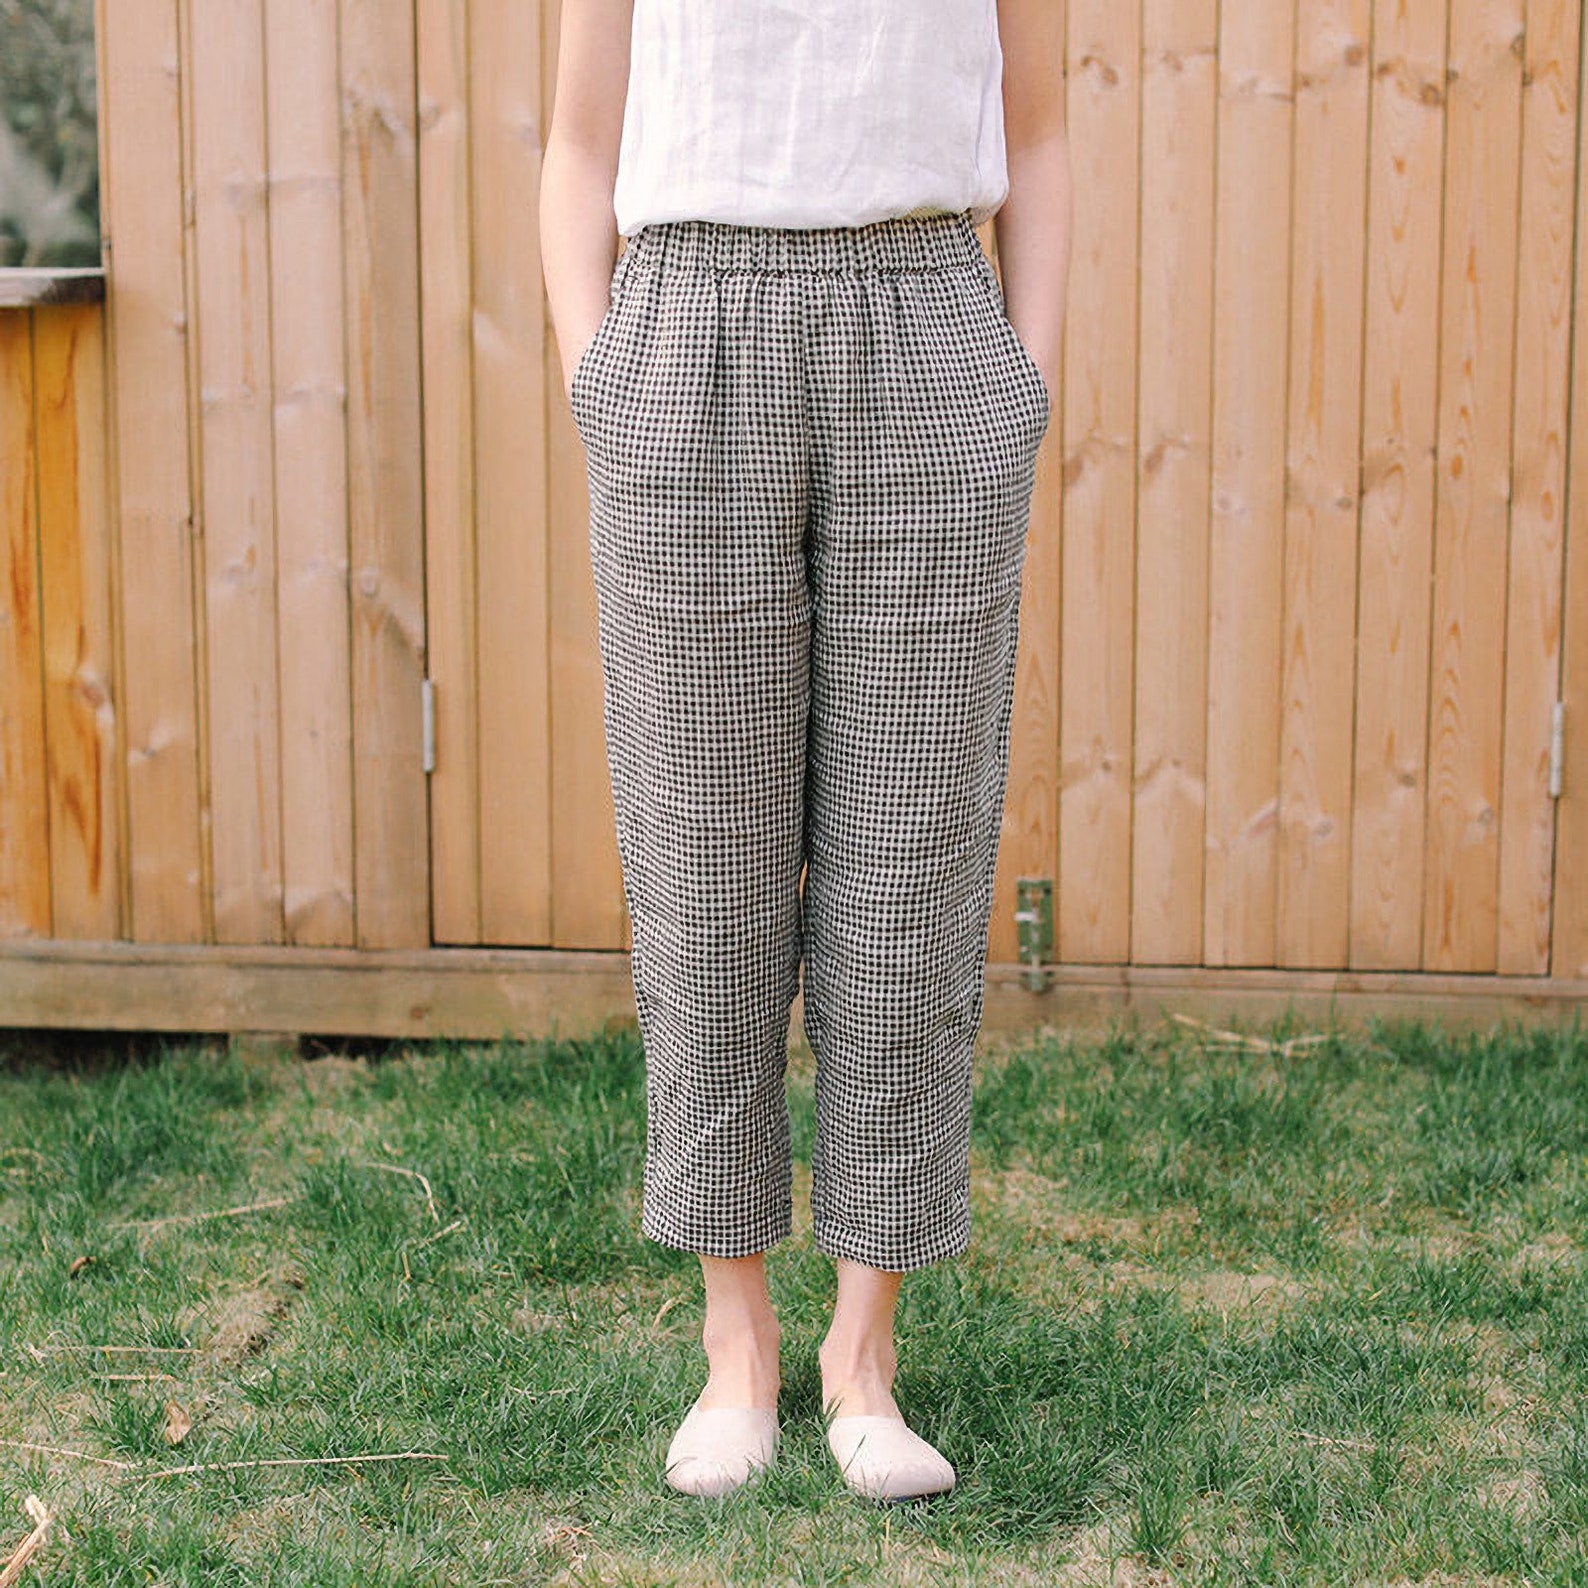 26 Breathable Pants For Anyone Who Hates Shorts